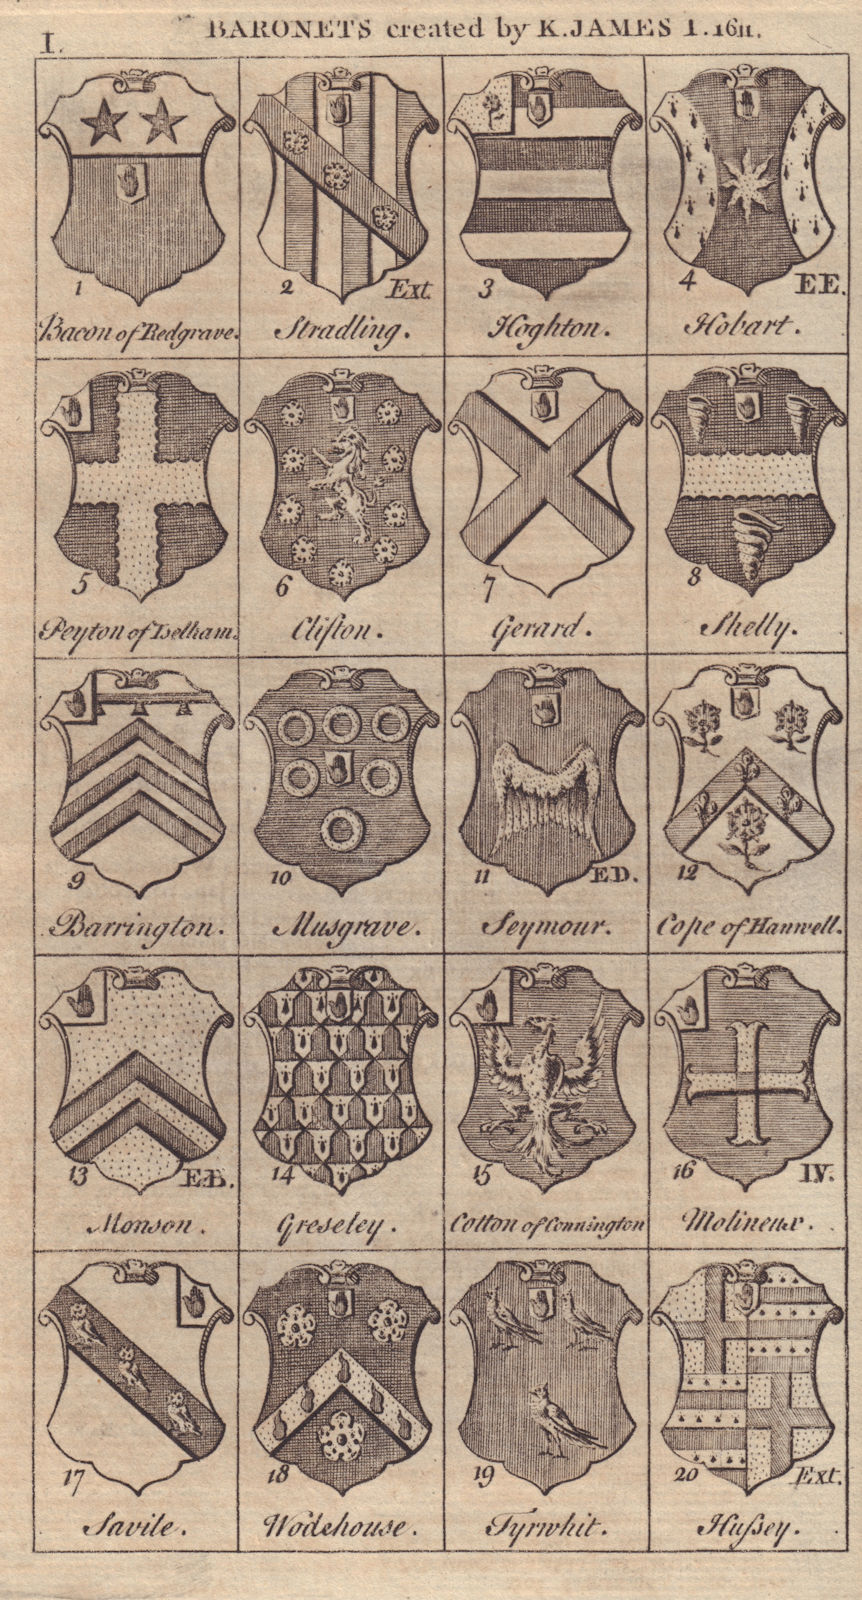 Associate Product James I Baronets 1611 Stradling Hoghton Hobart Clifton Gerard Seymour… 1750